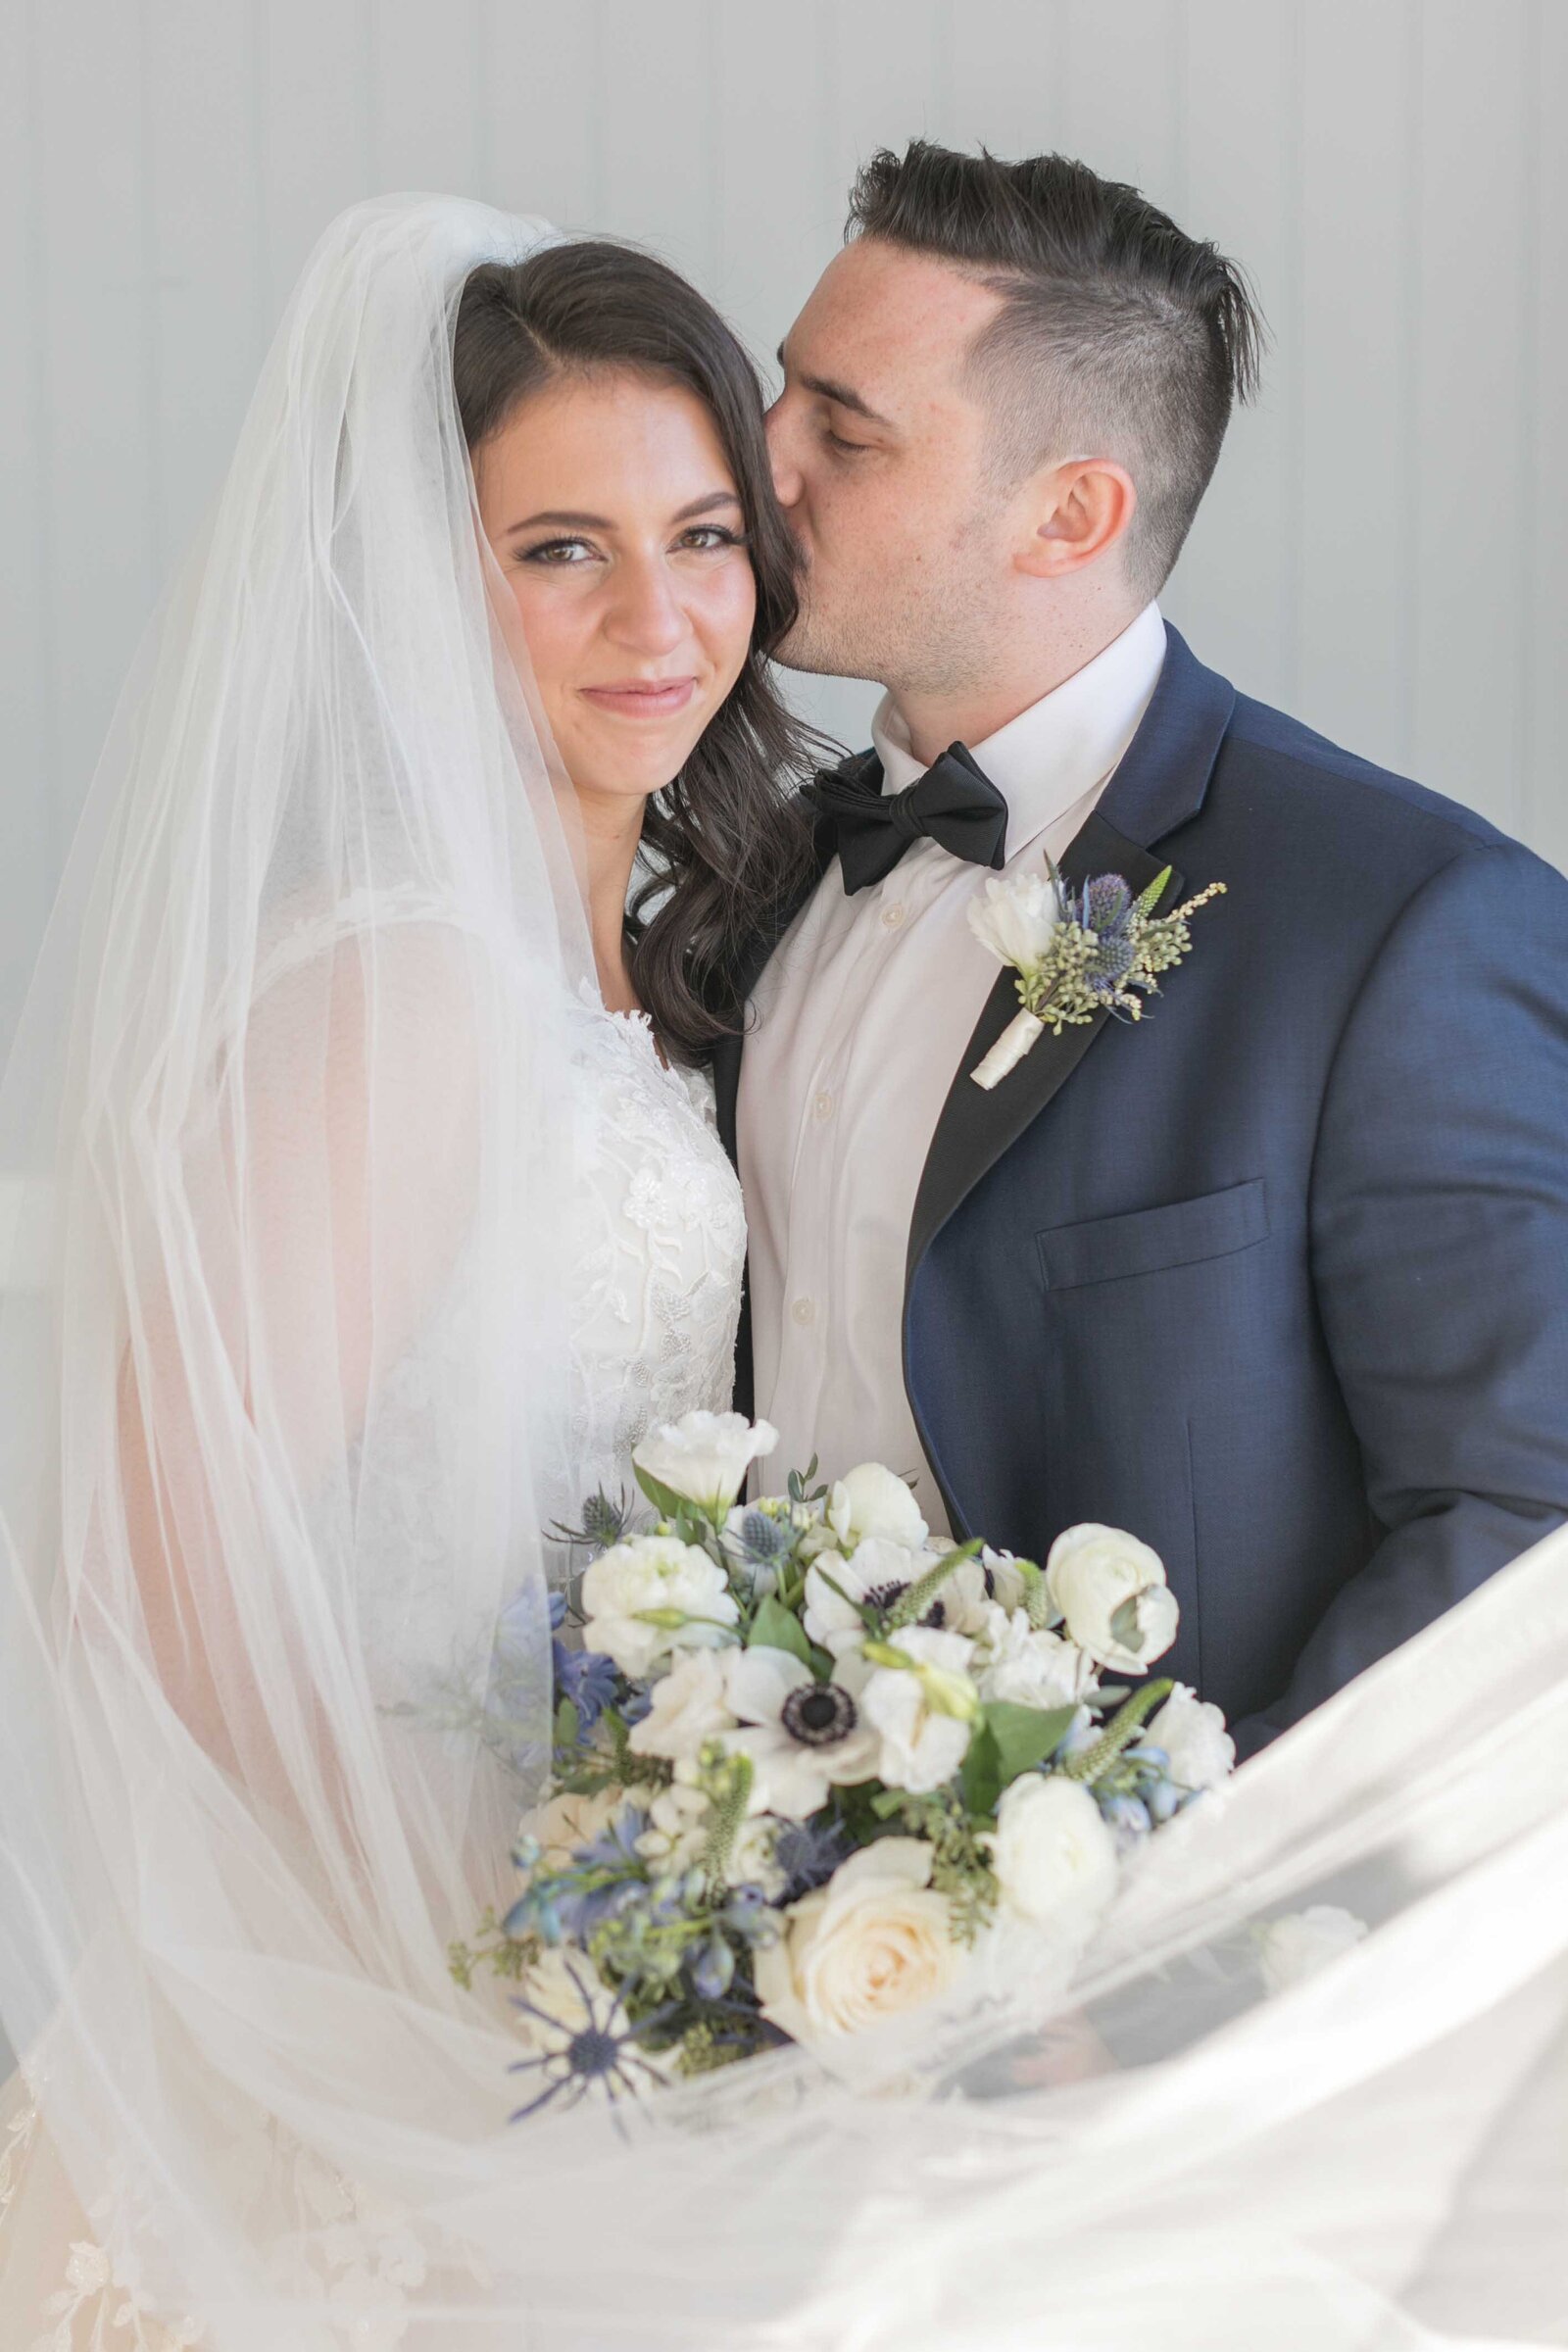 Jenna Davis Photography | Baltimore Wedding Photographer